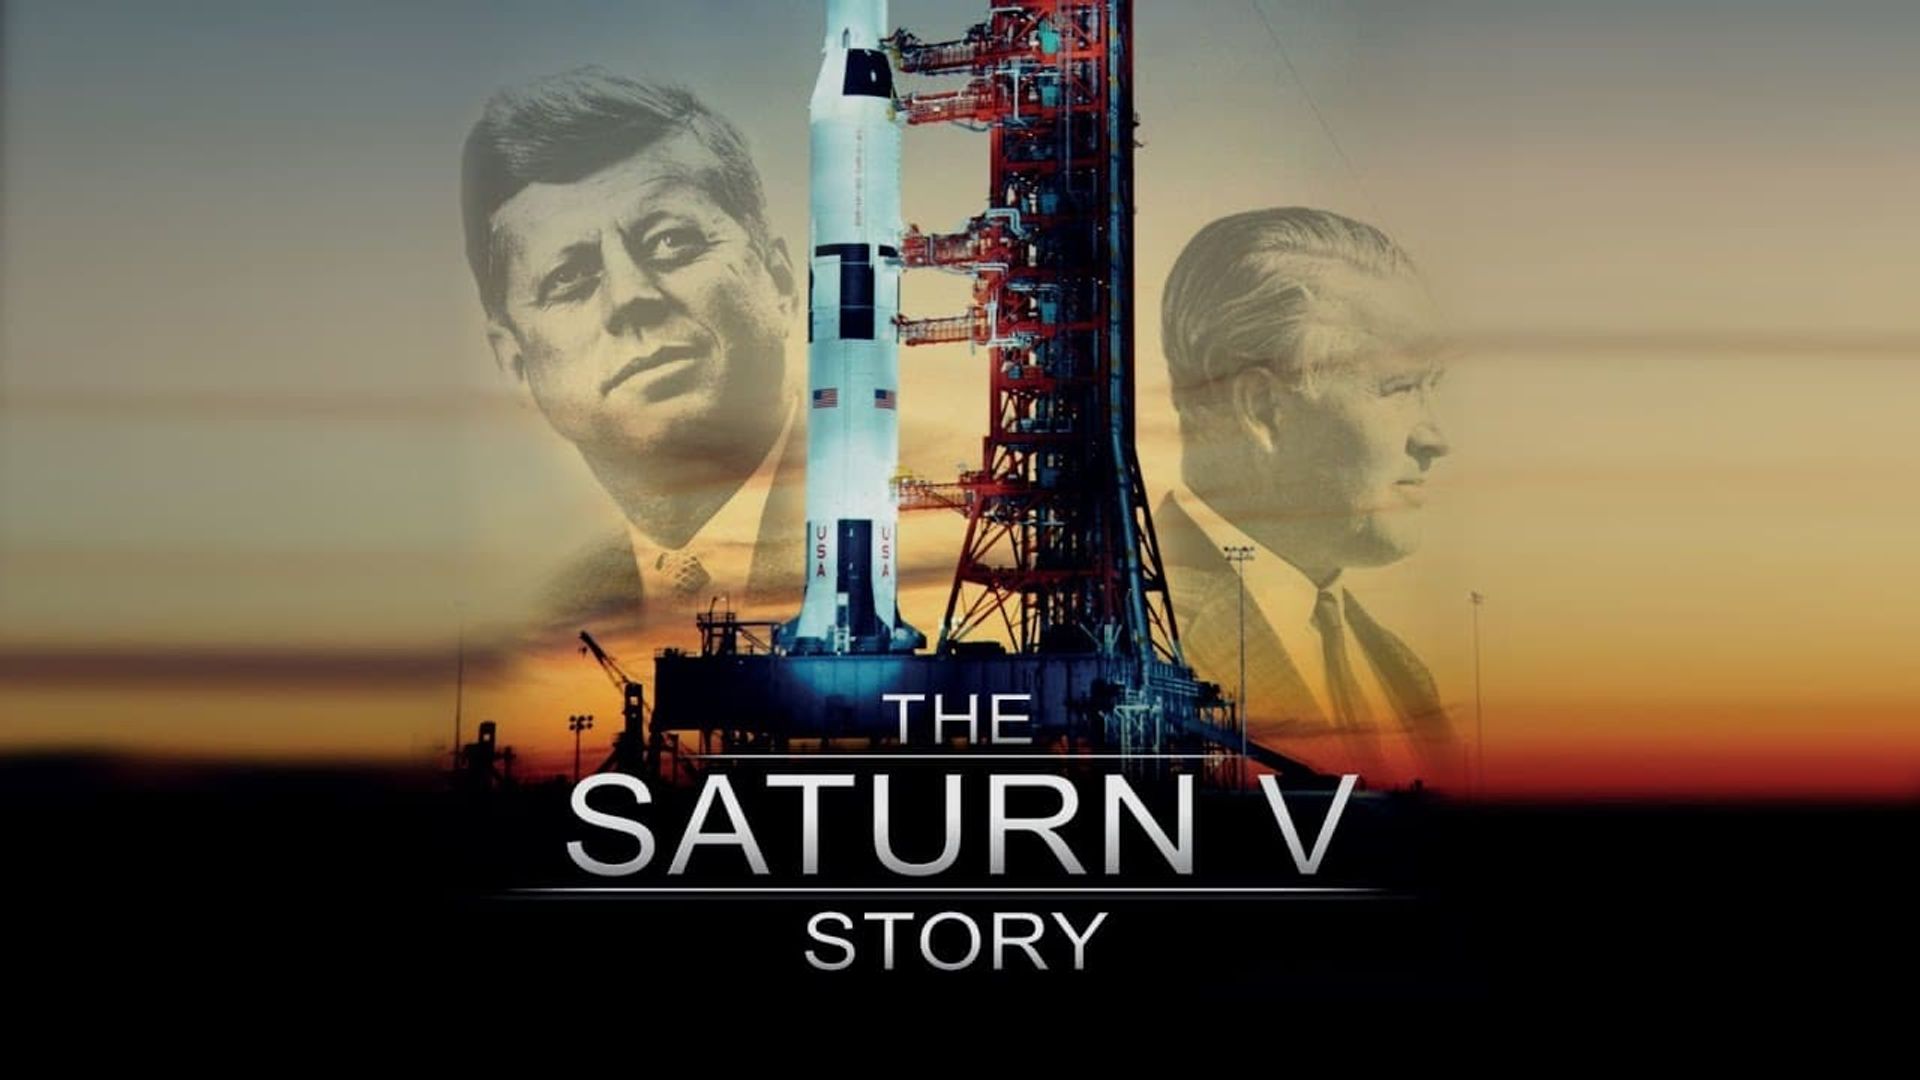 The Saturn V Story background